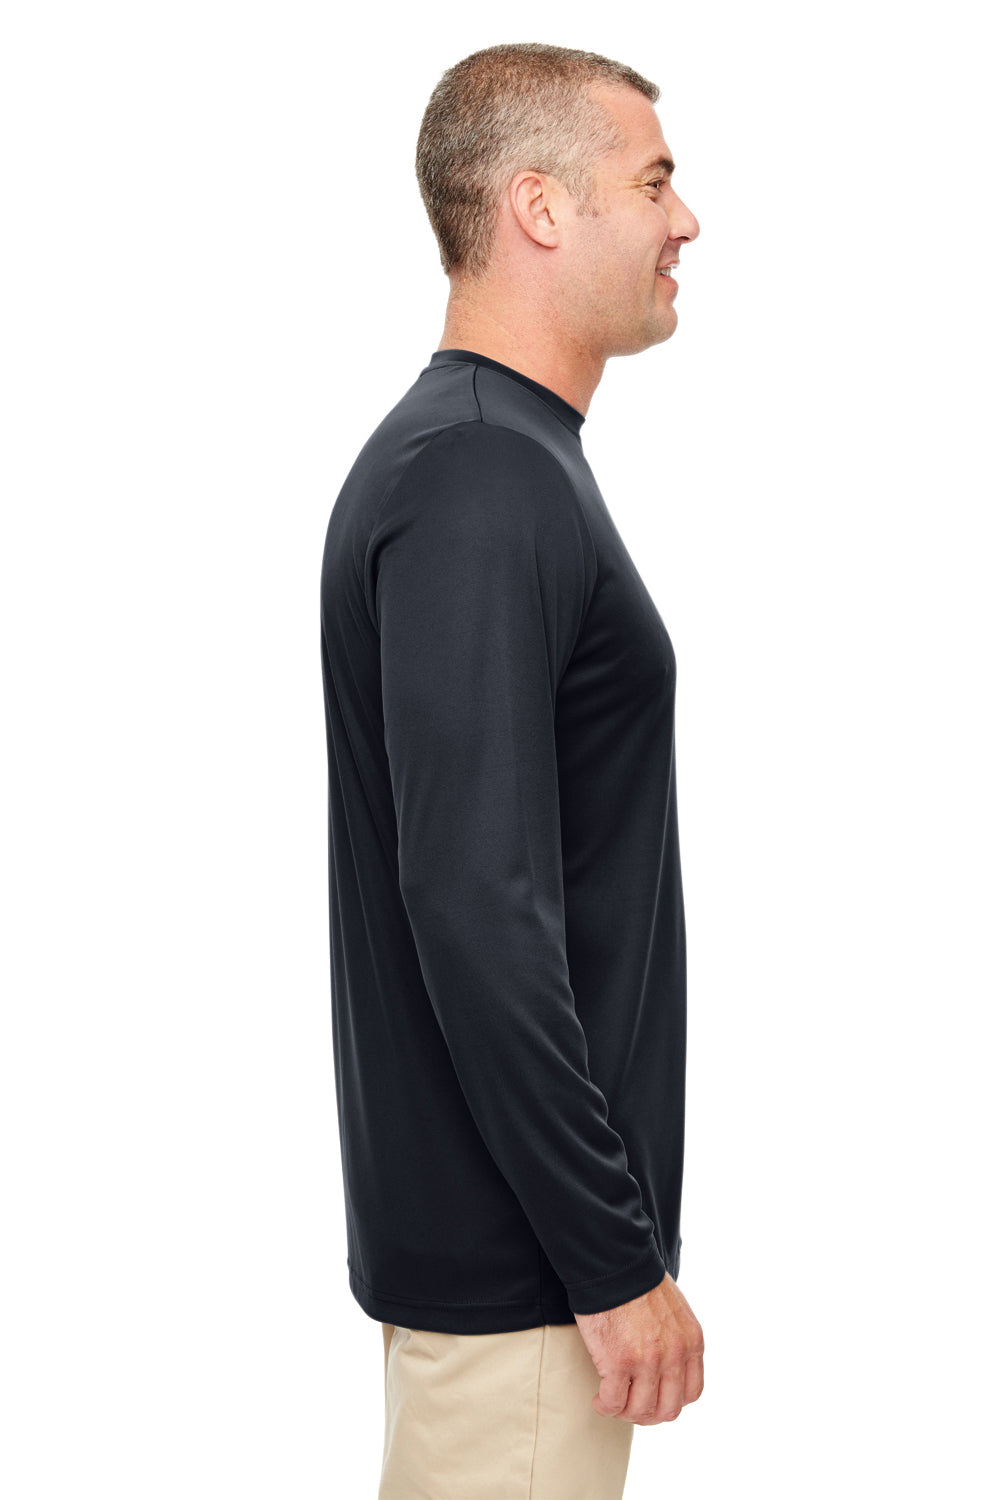 UltraClub 8622 Mens Cool & Dry Performance Moisture Wicking Long Sleeve Crewneck T-Shirt Black Side